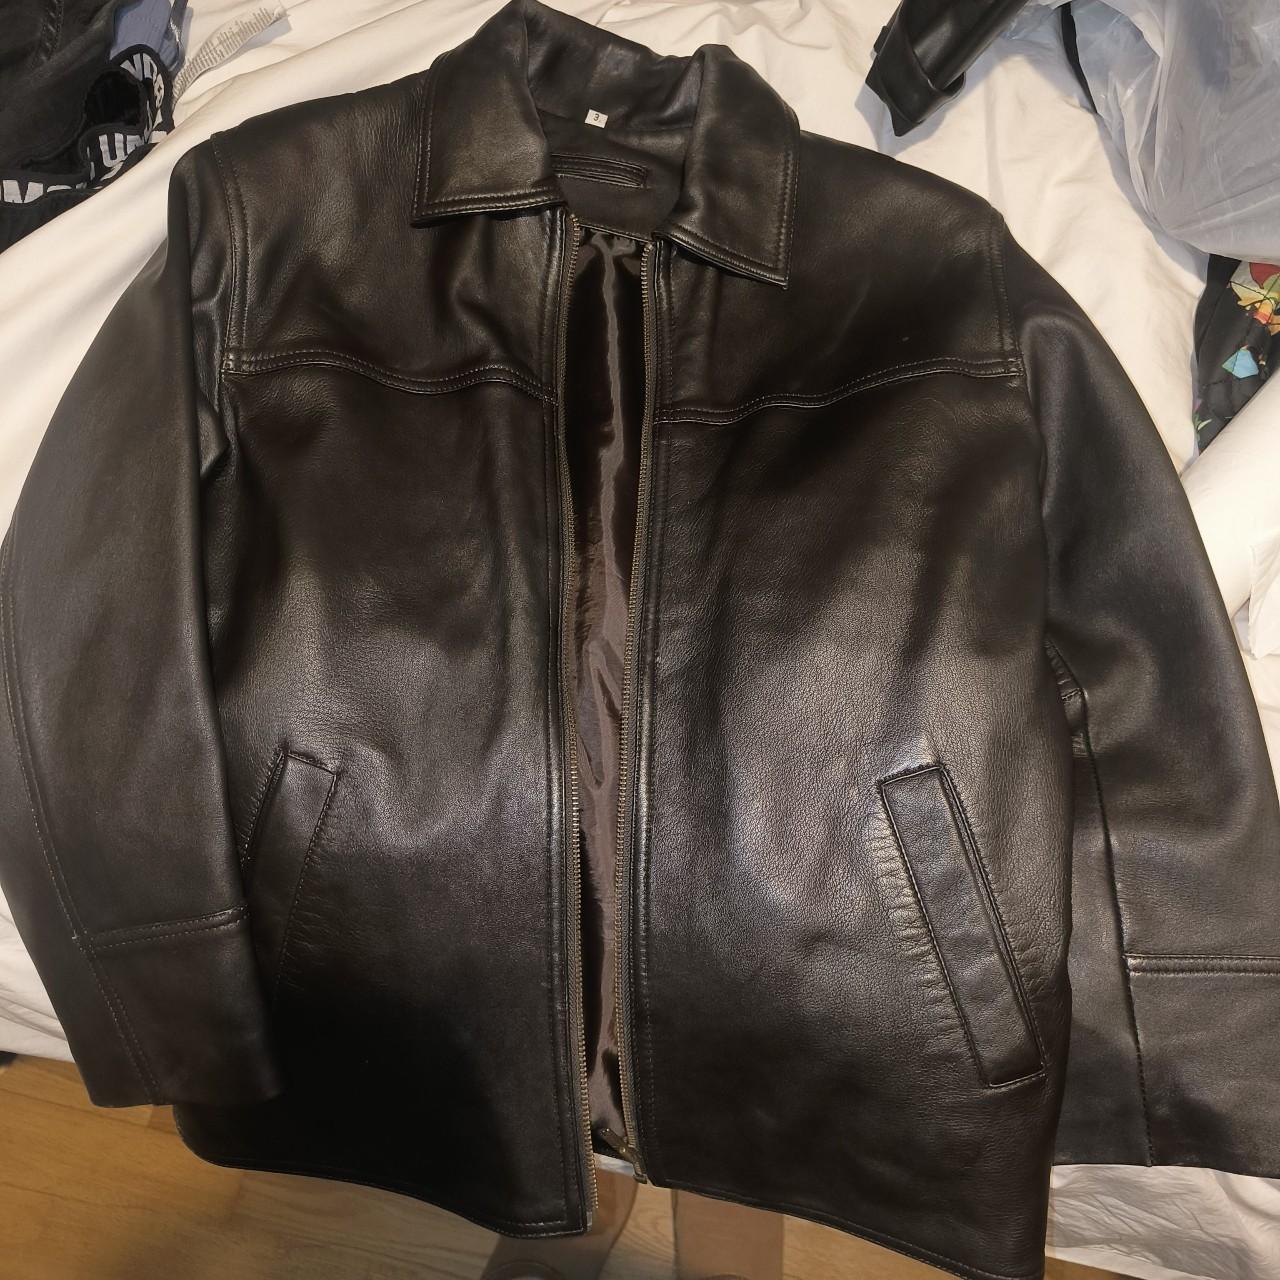 Vintage brown leather jacket size small - Depop